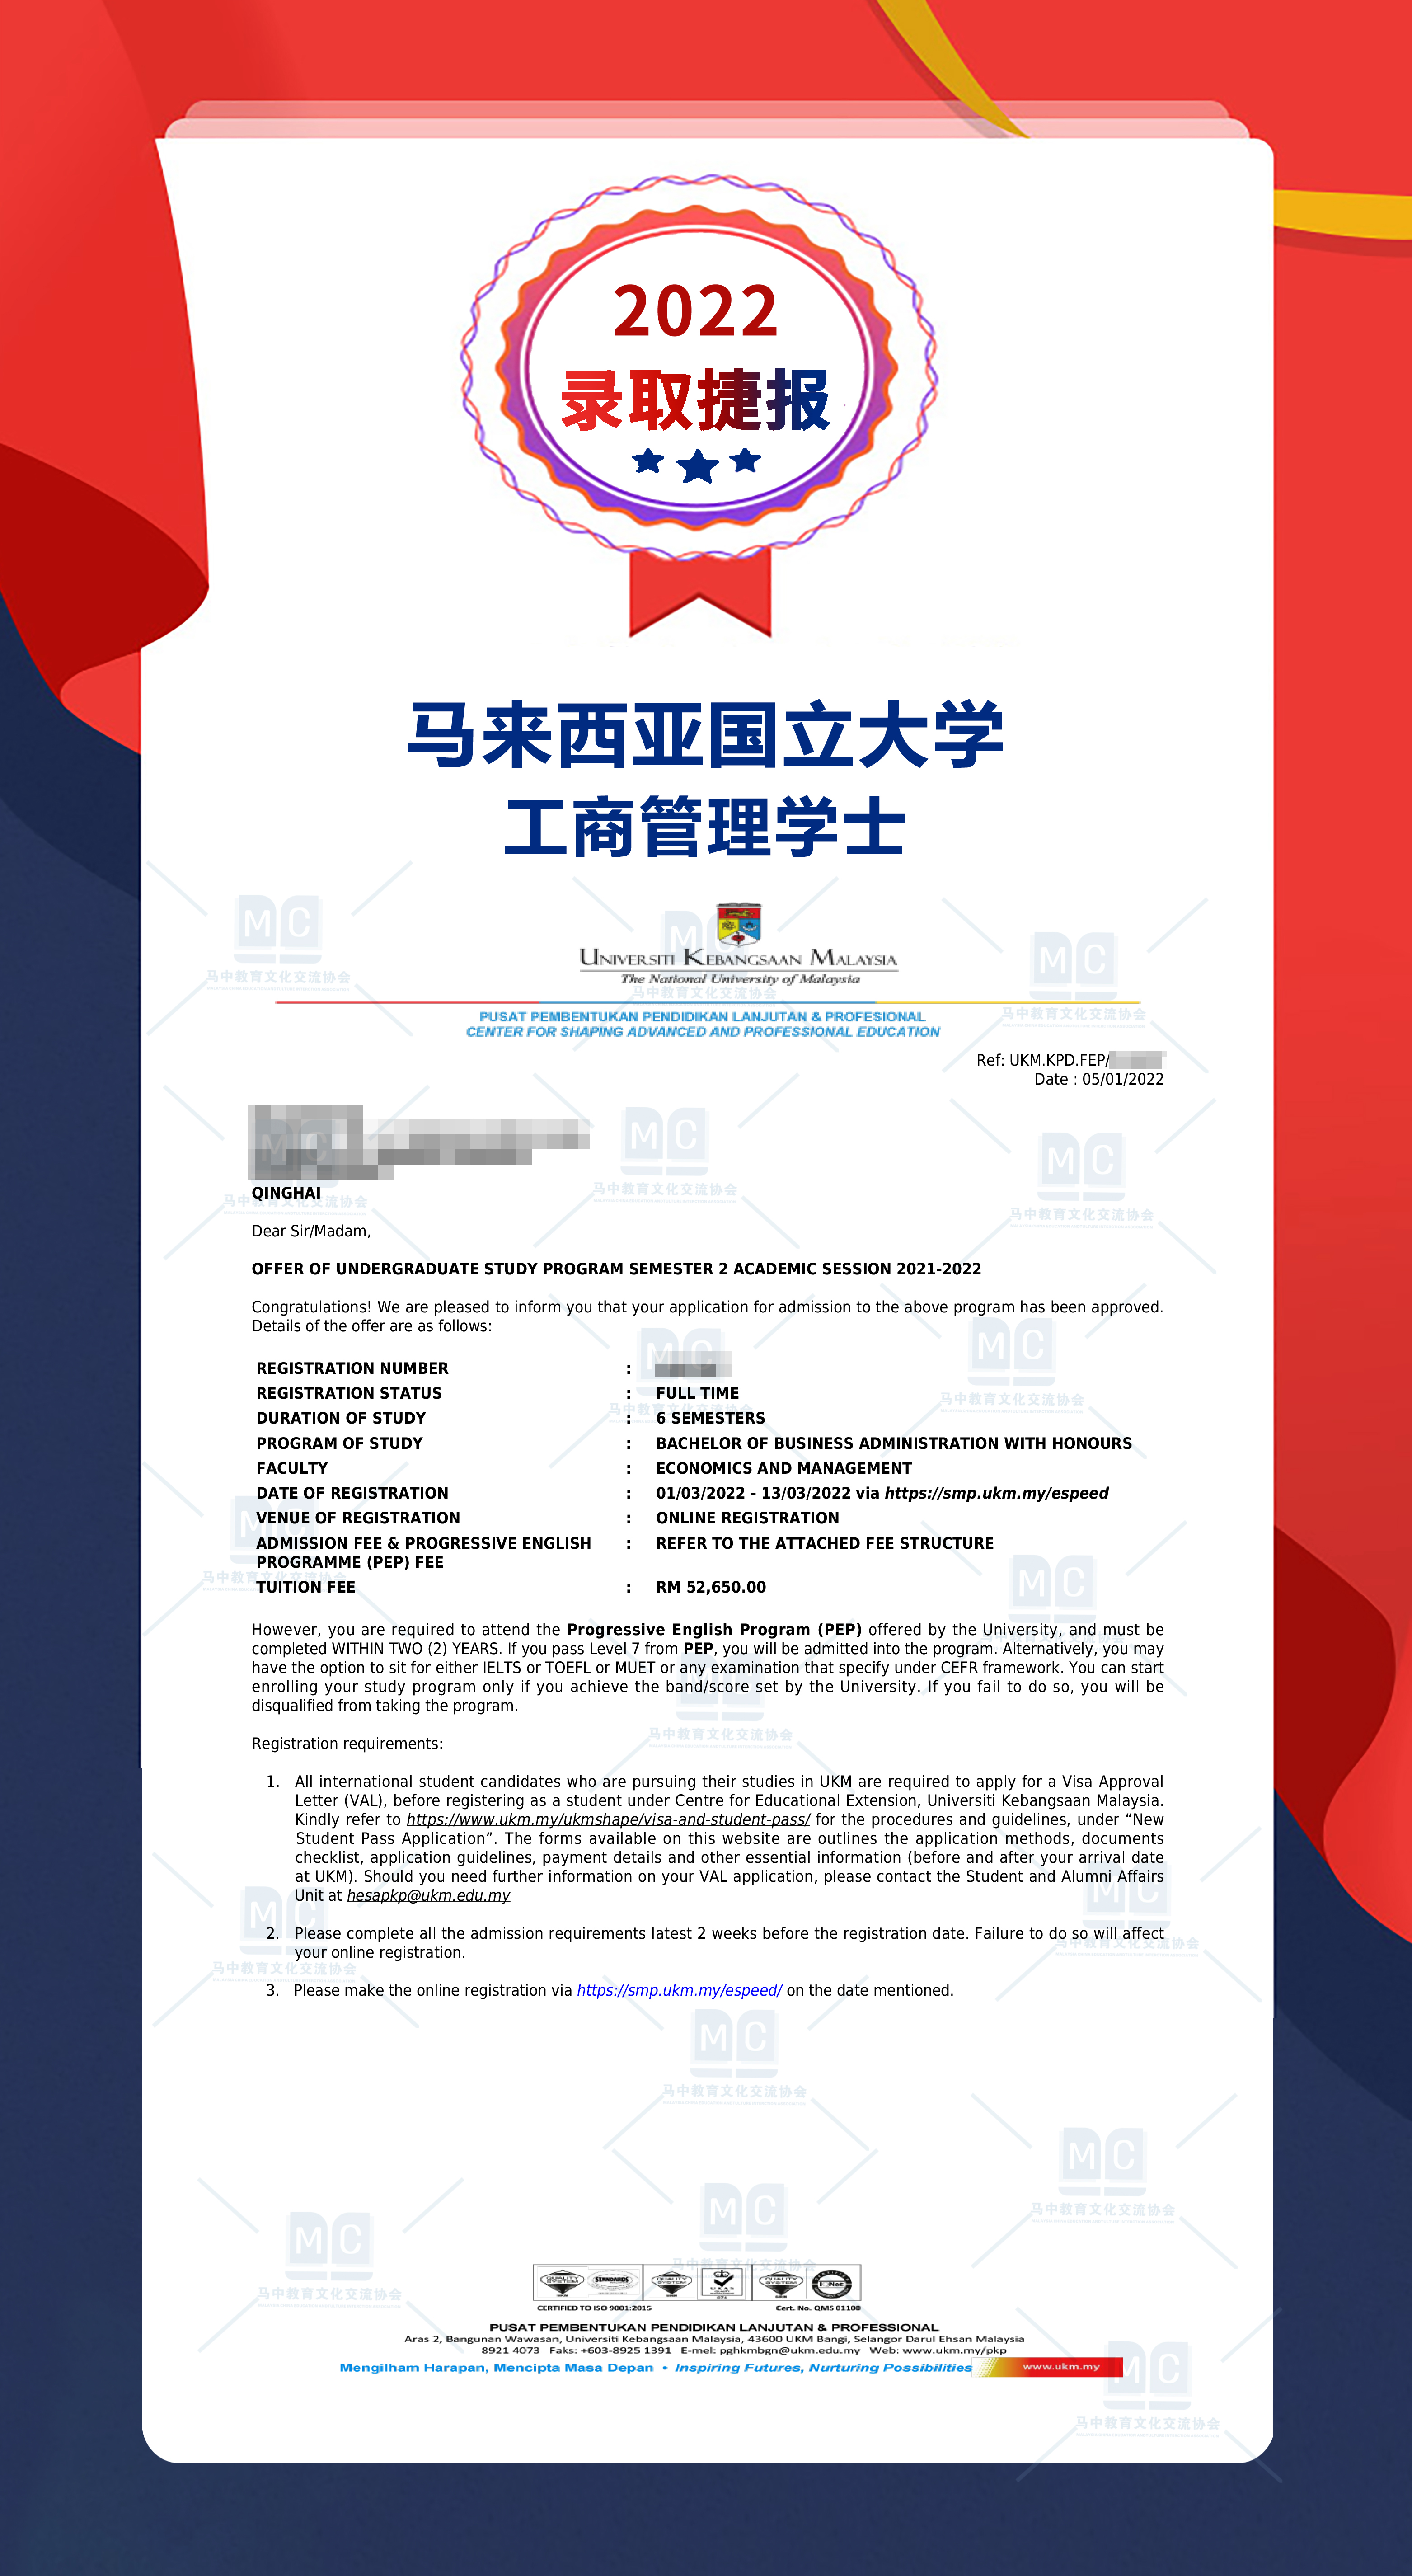 ukm-c-offer-hexiaoyuan-0110-1.jpg